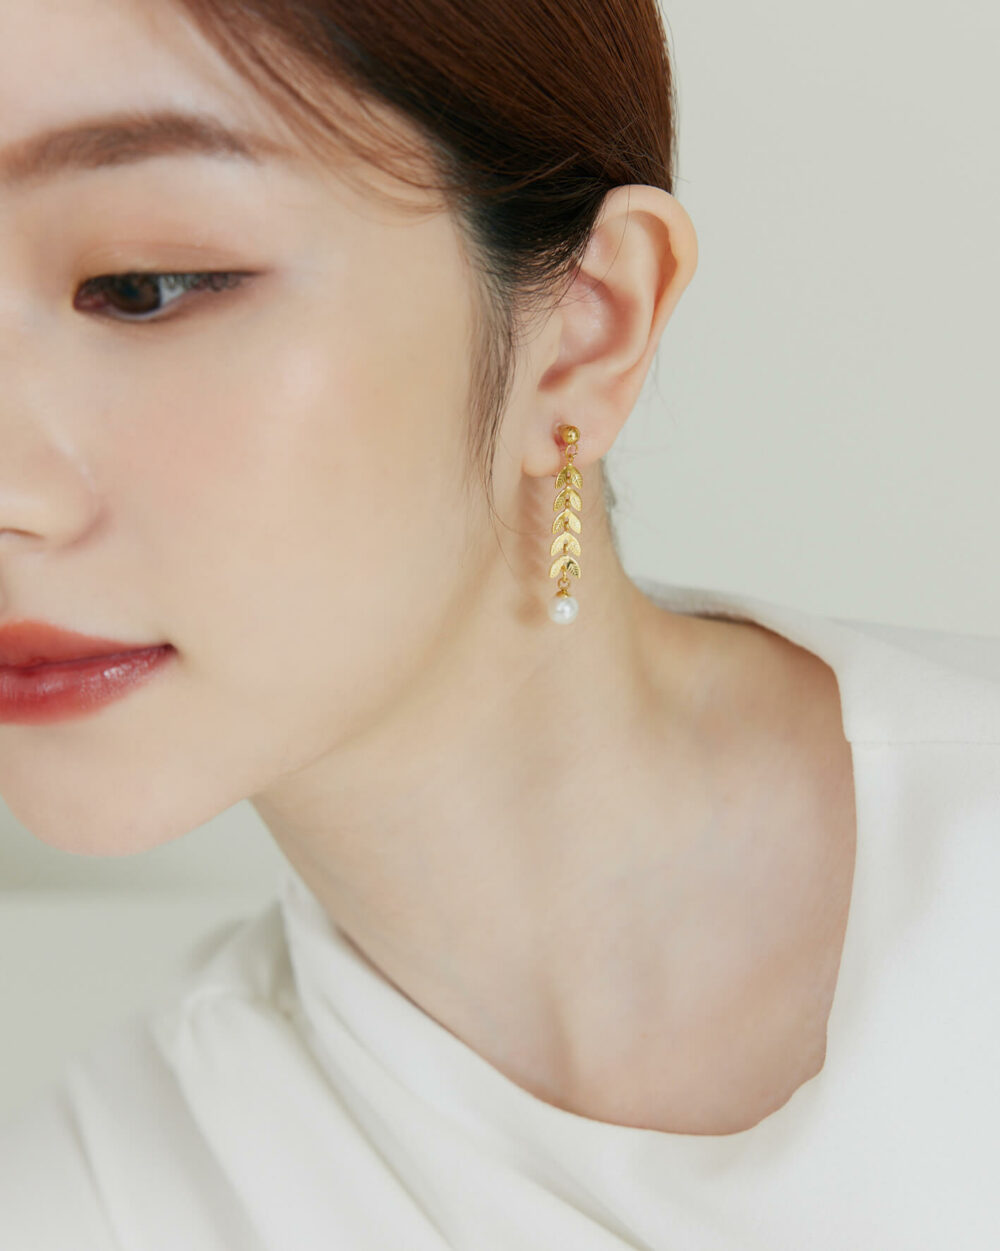 Eco安珂,韓國飾品,韓國耳環,耳針式耳環,矽膠夾耳環,透明耳夾垂墜耳環,無痛耳夾耳環,葉子耳環